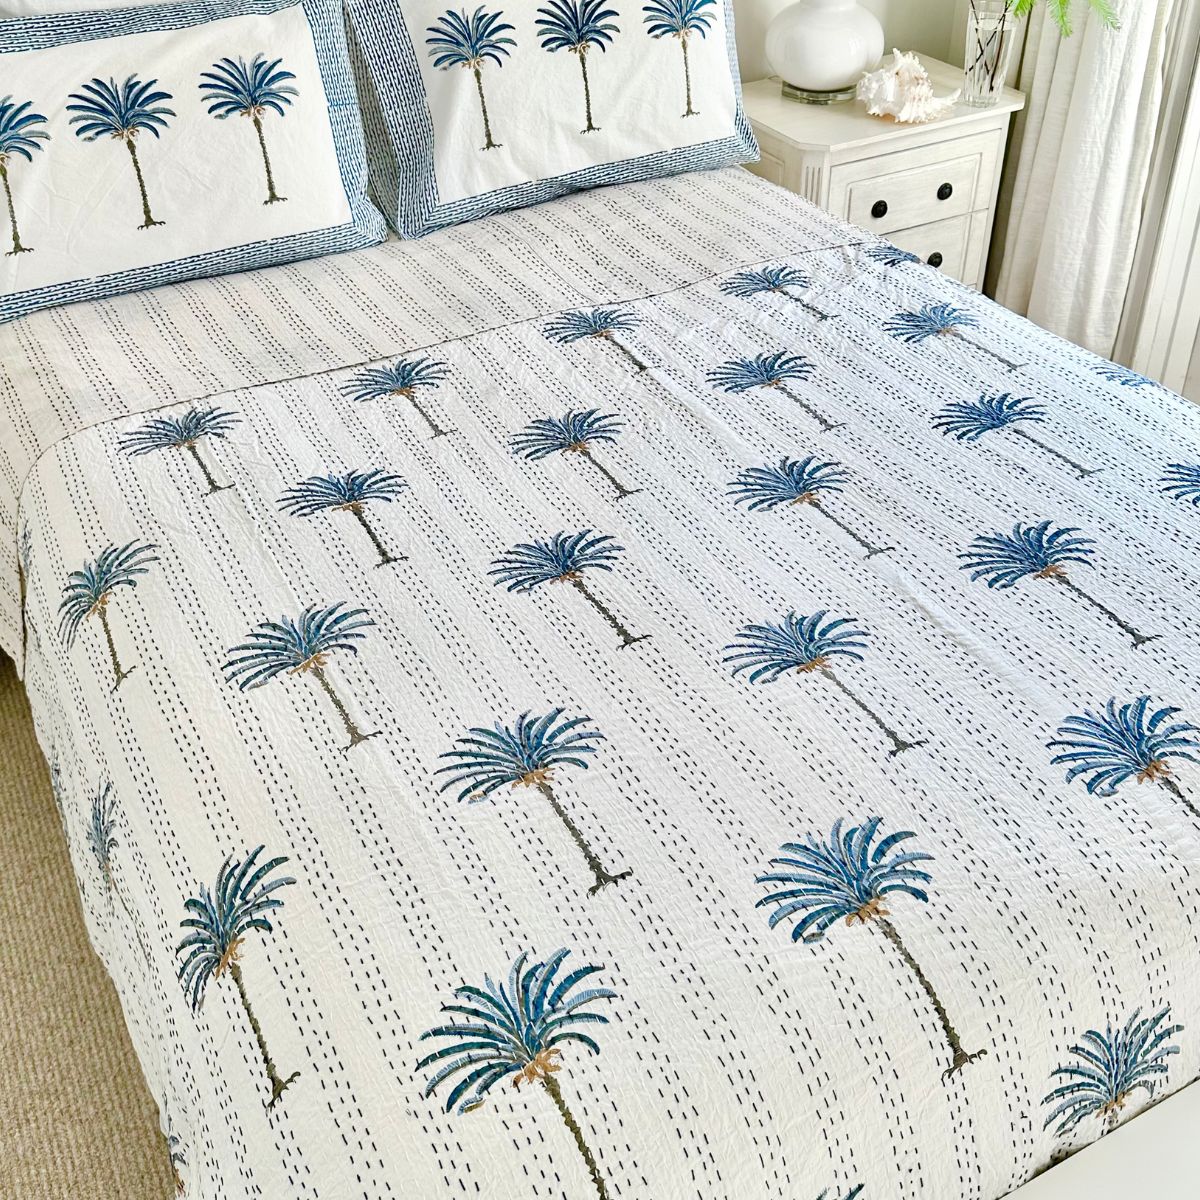 Blue Palms Kantha quilt/bedspread